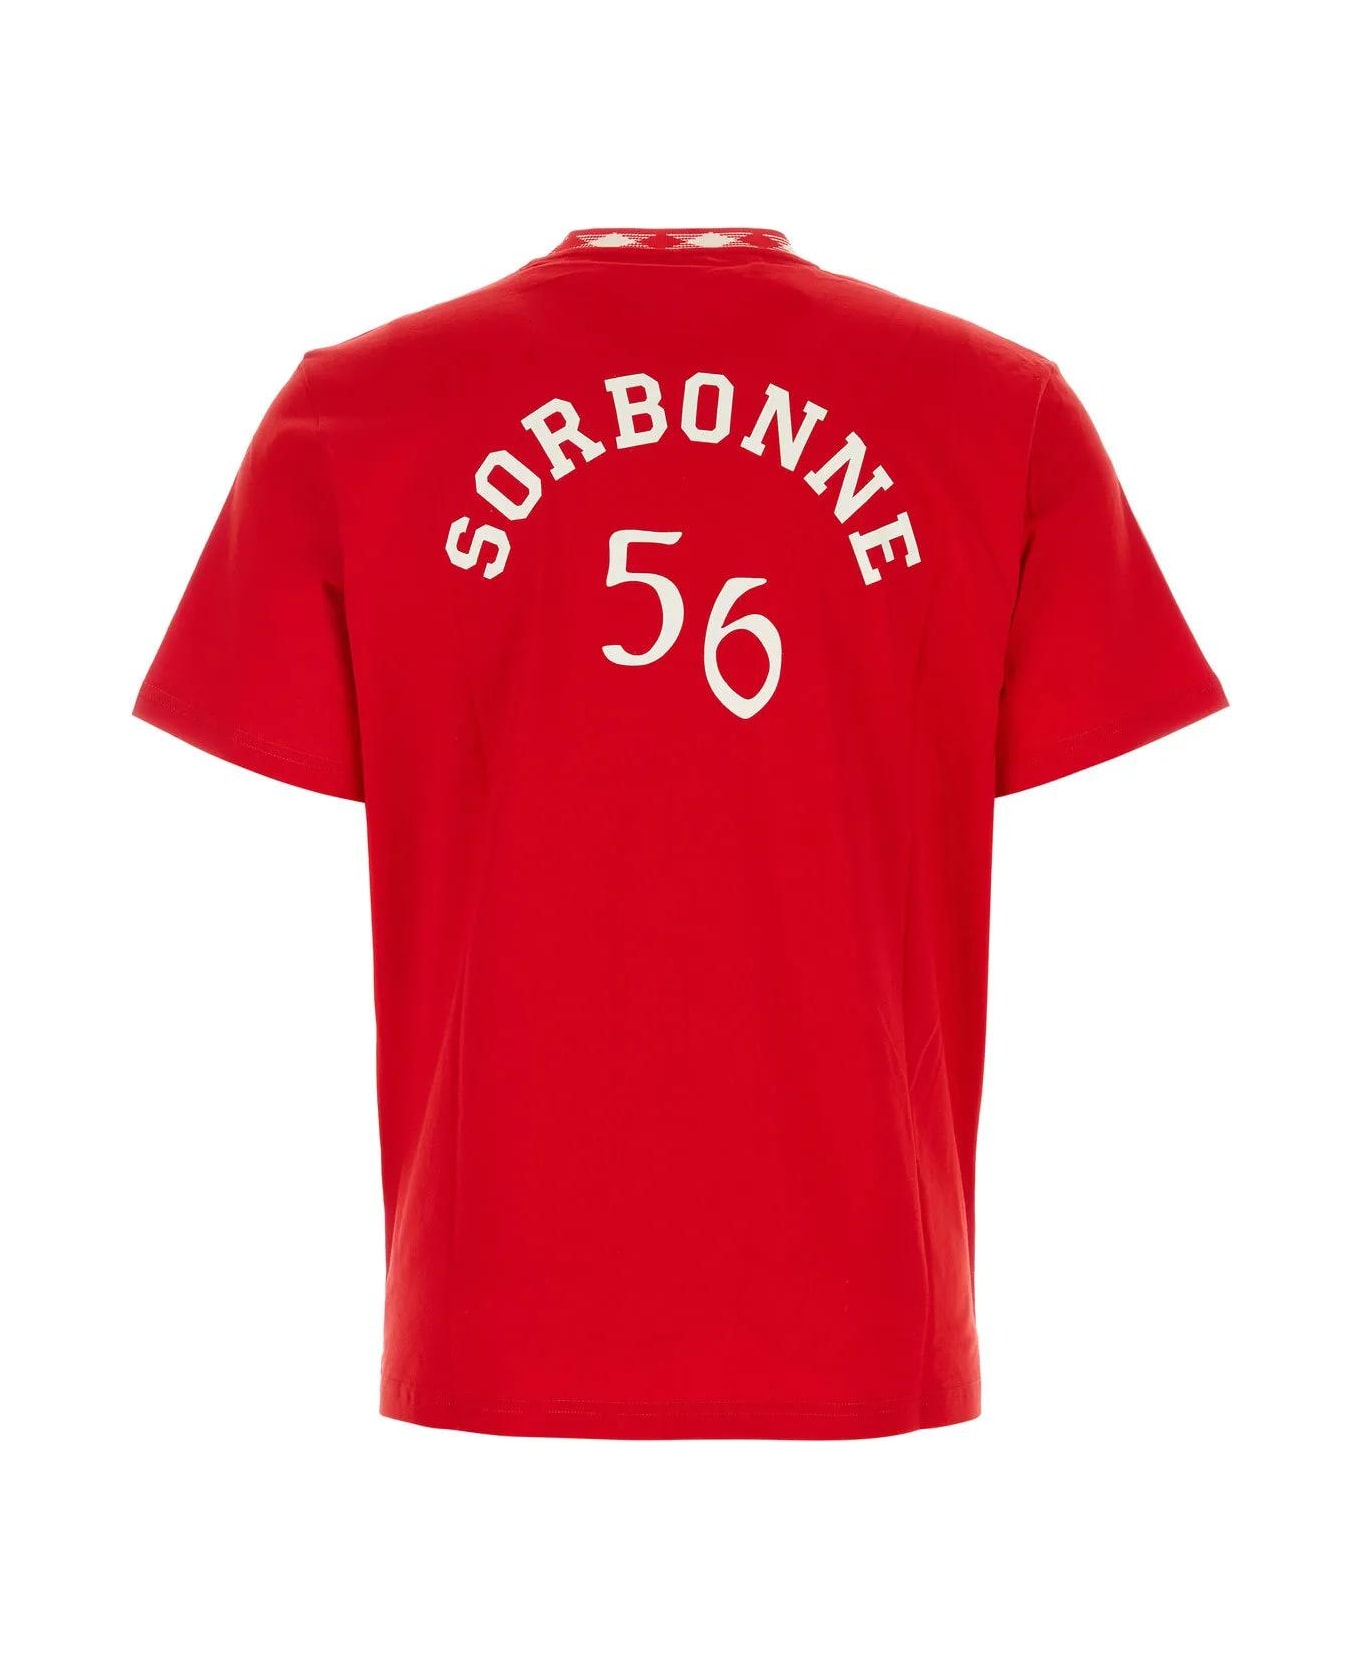 Wales Bonner Red Cotton Sorbonne 56 Oversize T-shirt - Red